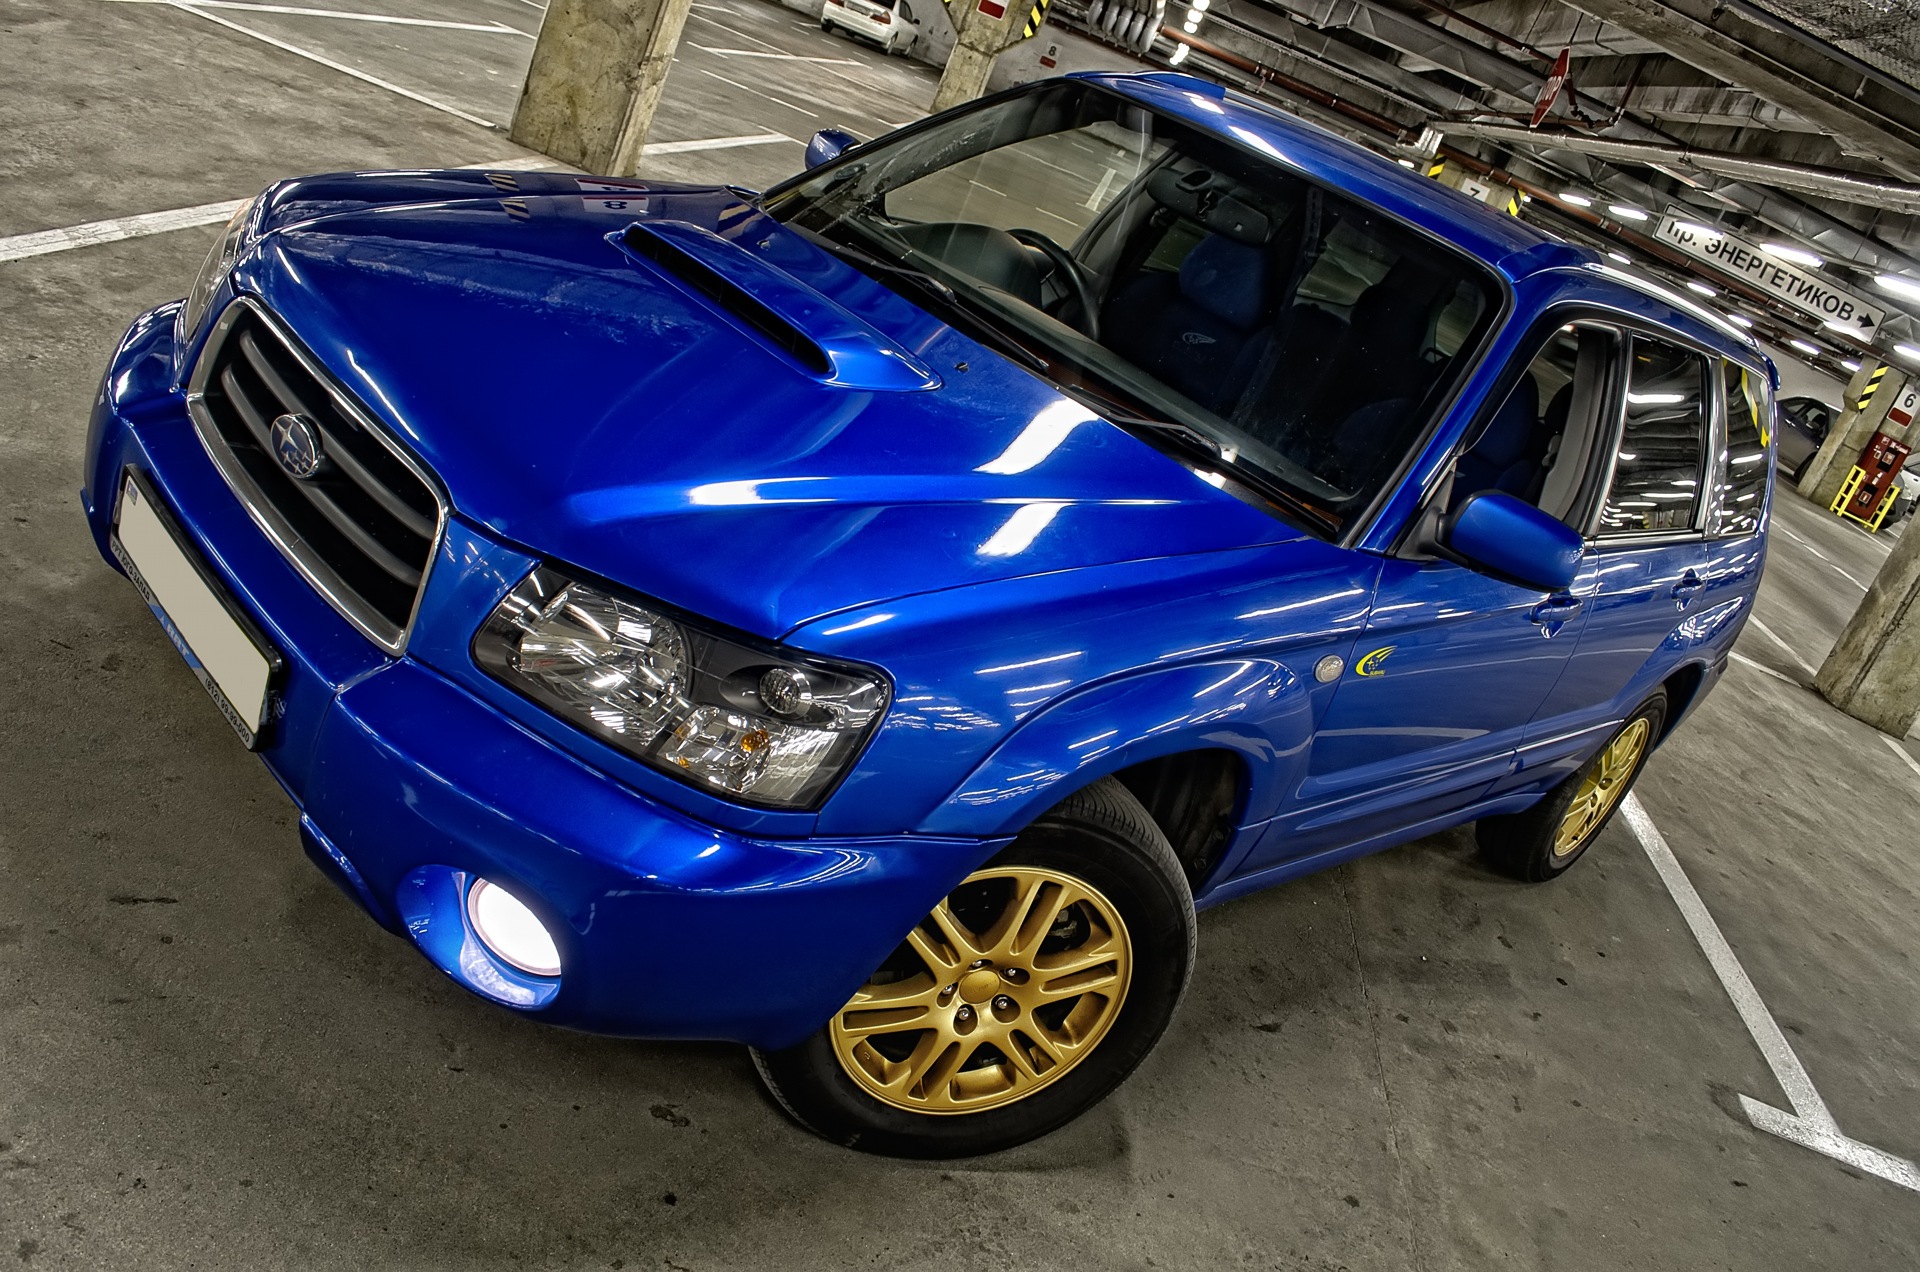 Кузов субару форестер купить. Subaru Forester STI 2004. Цвет Субару 555. Субару Форестер 555. Субару Форестер синий.